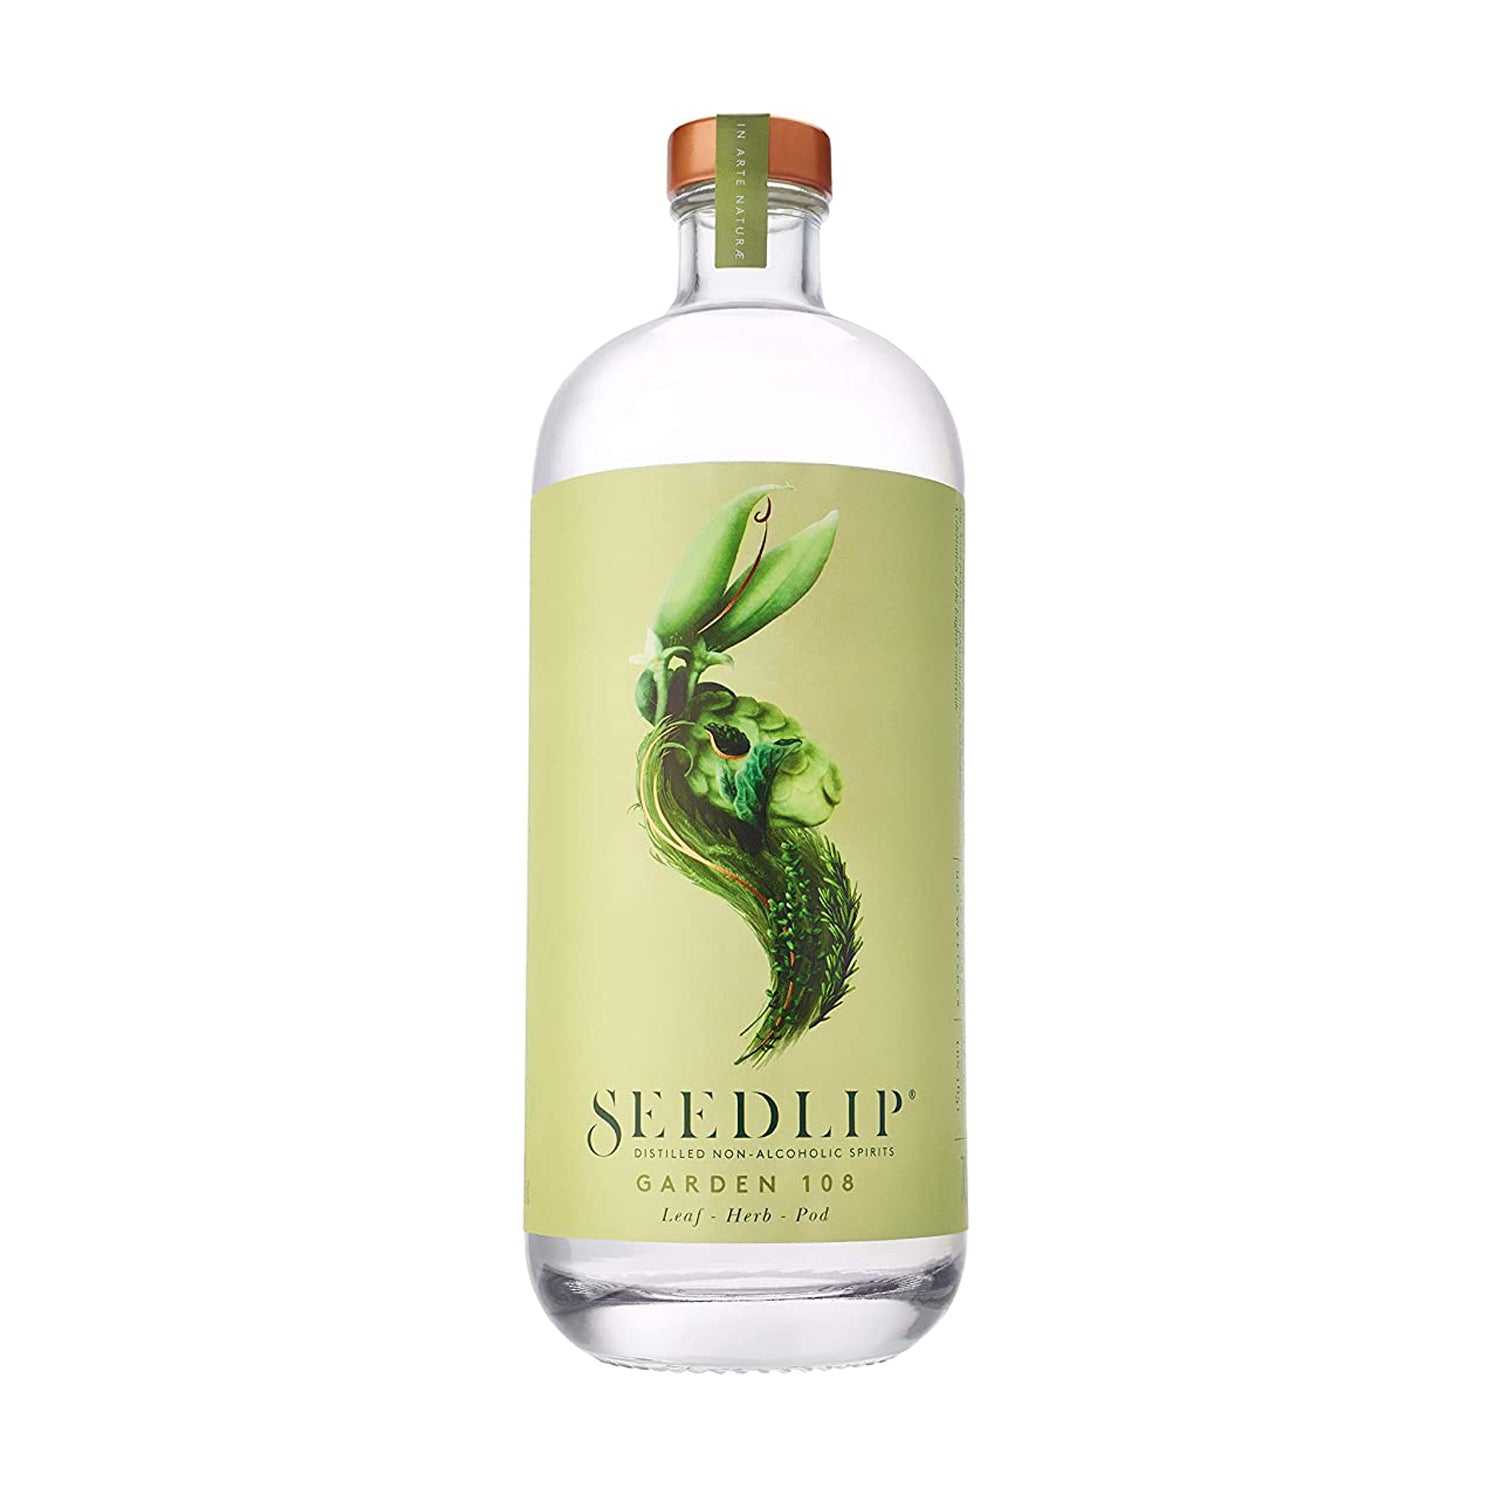 Seedlip Distilled Non-Alcoholic Spirits 700ml